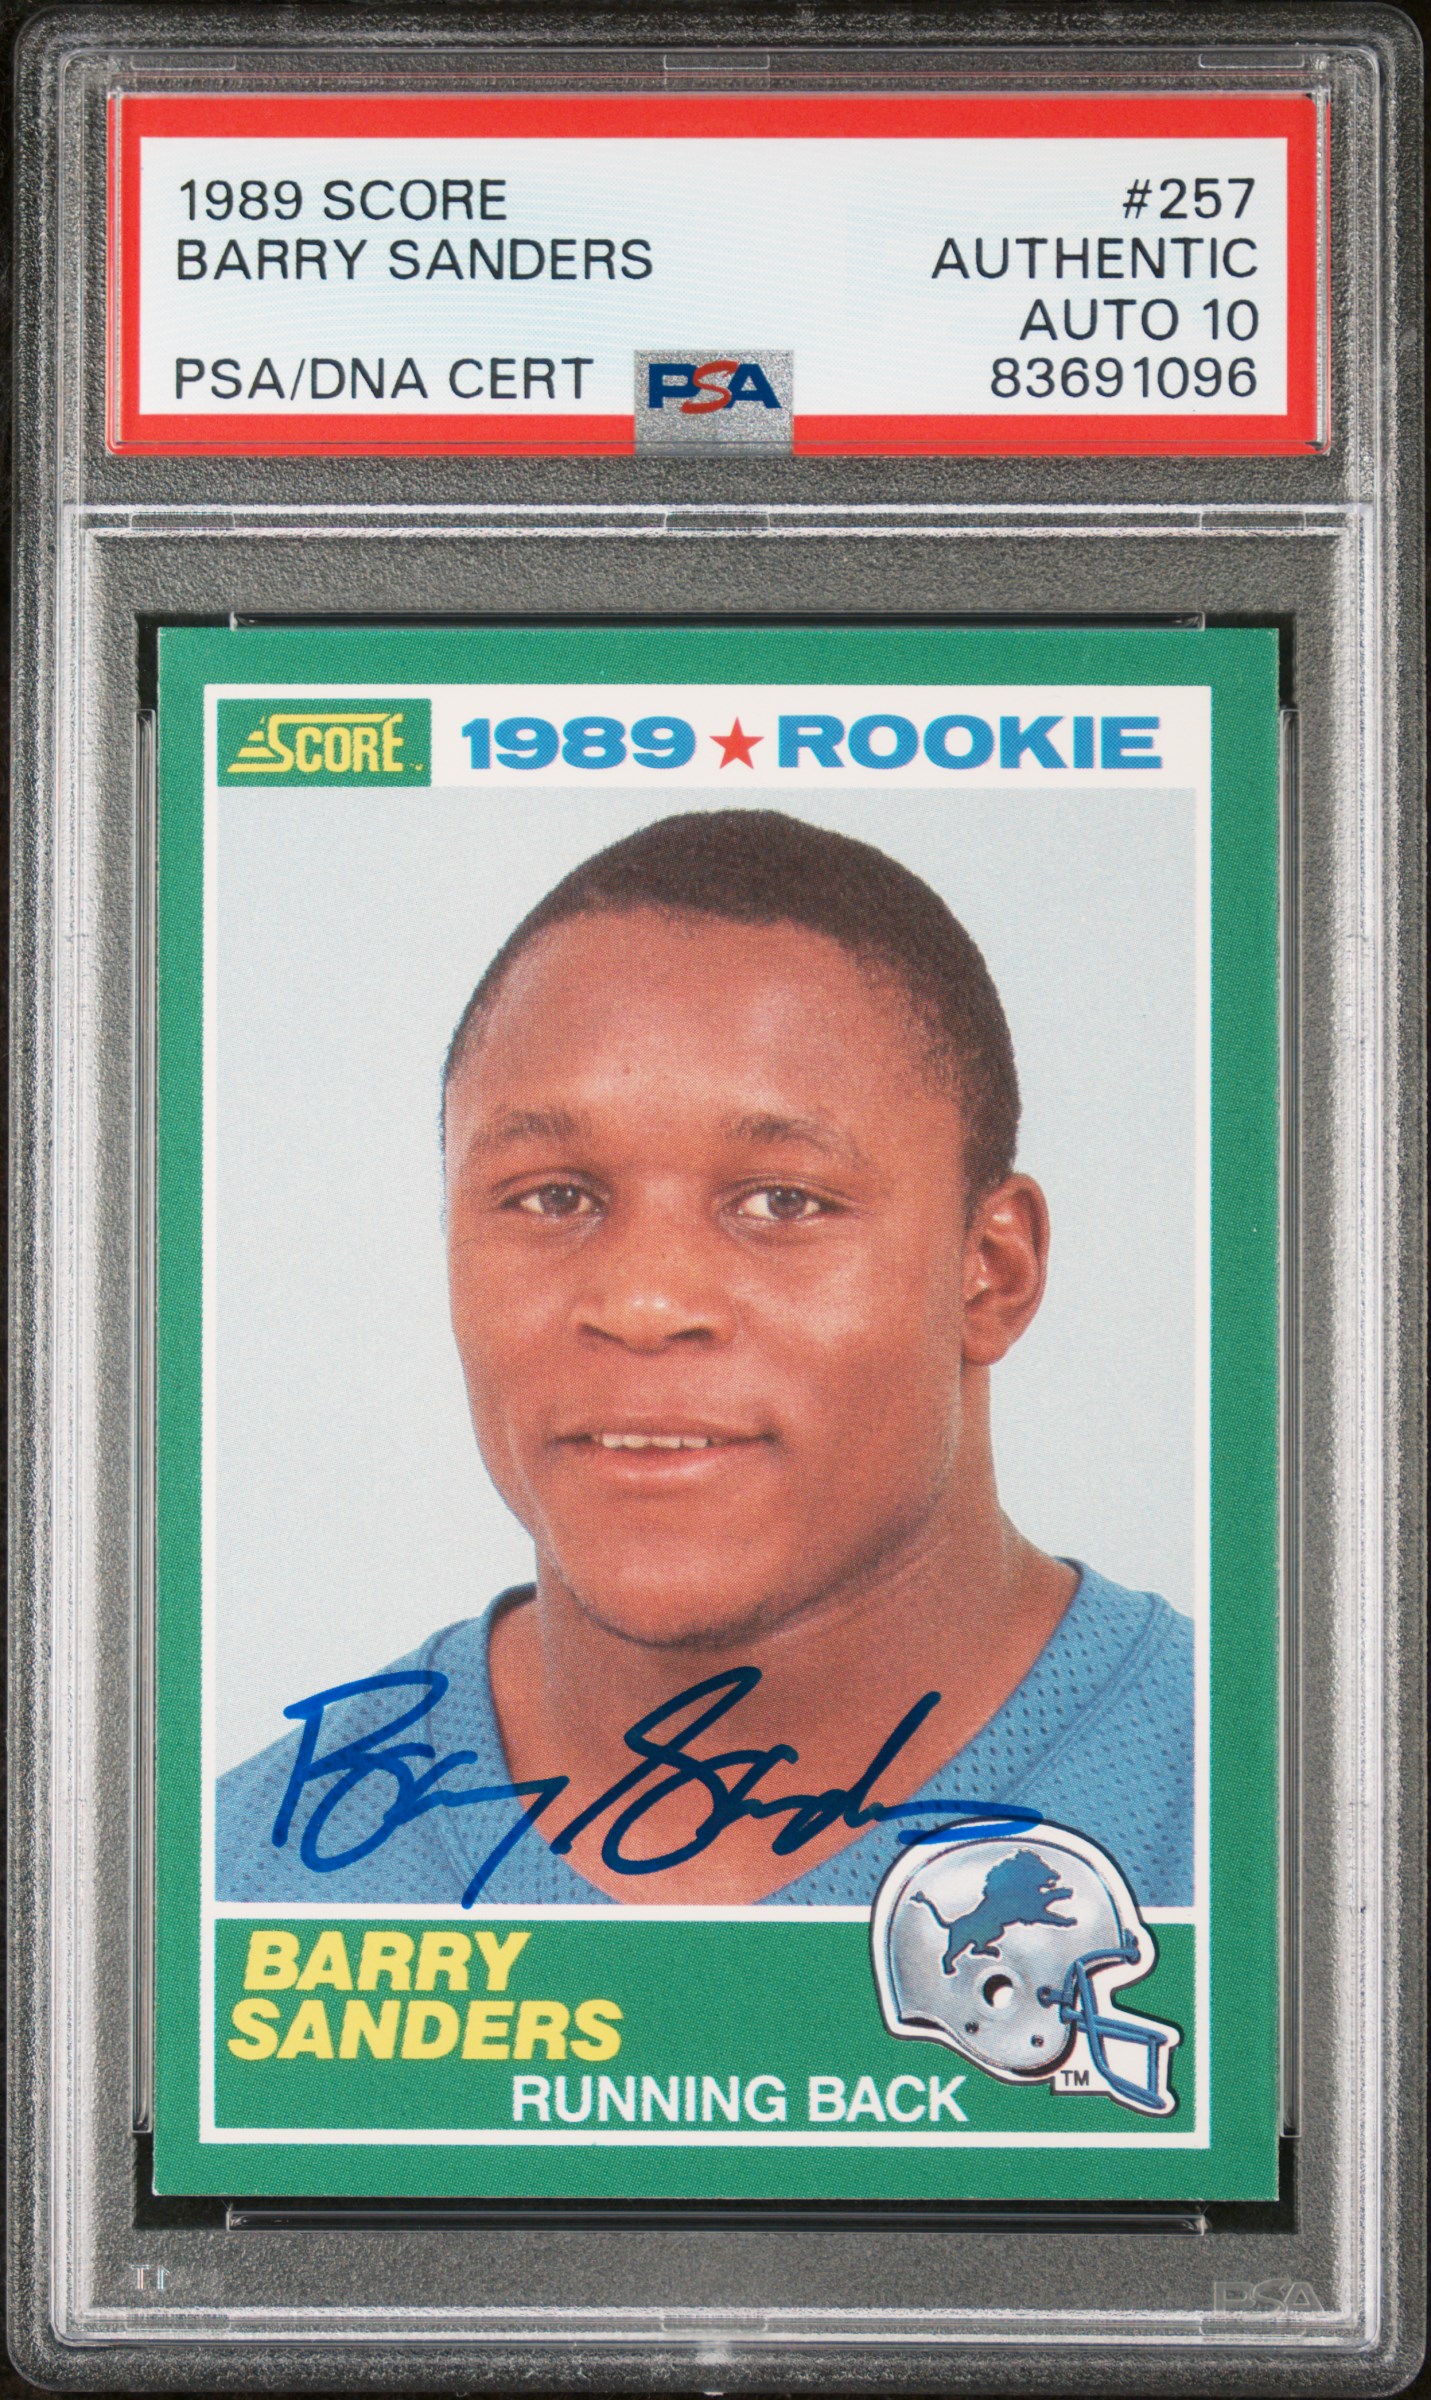 Barry Sanders 1989 Score Signed Football Rookie Card #257 Graded PSA 10 83691096